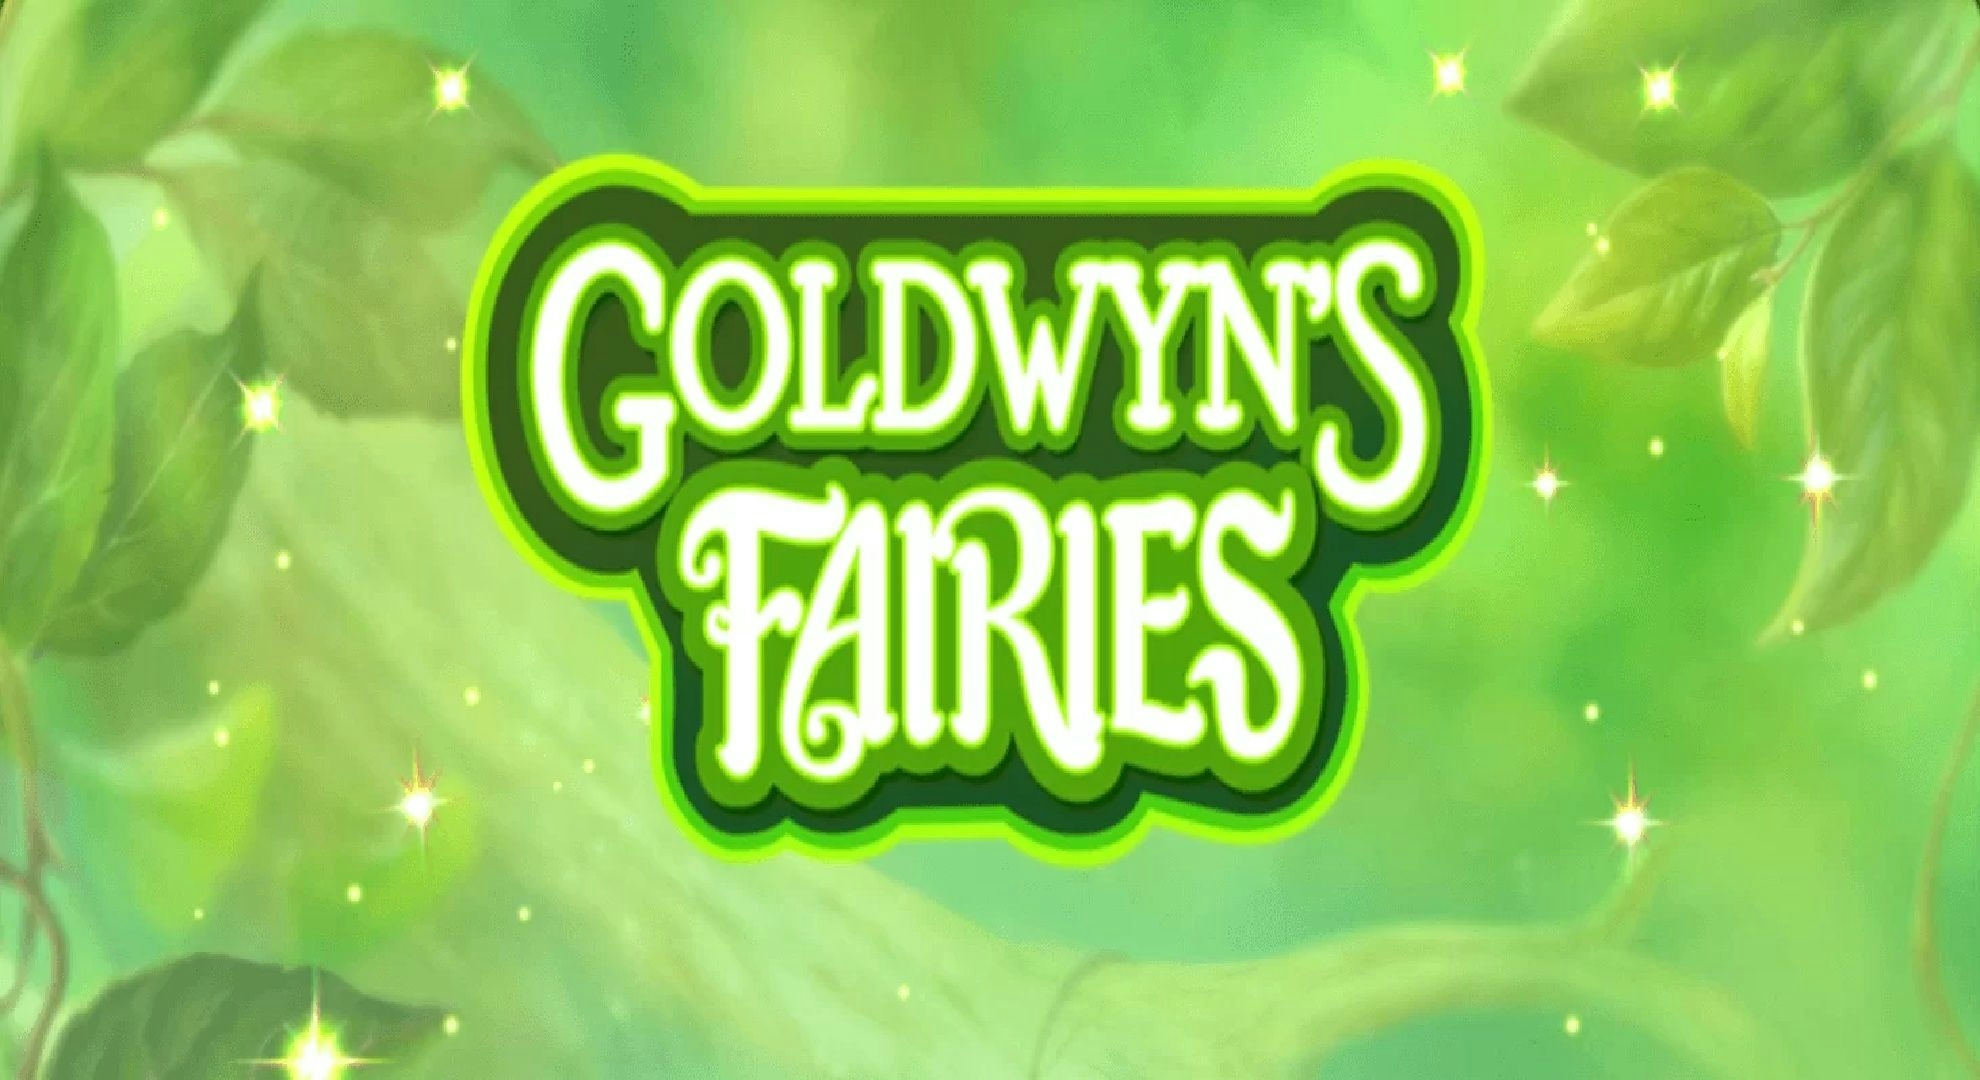 Goldwin's Fairies